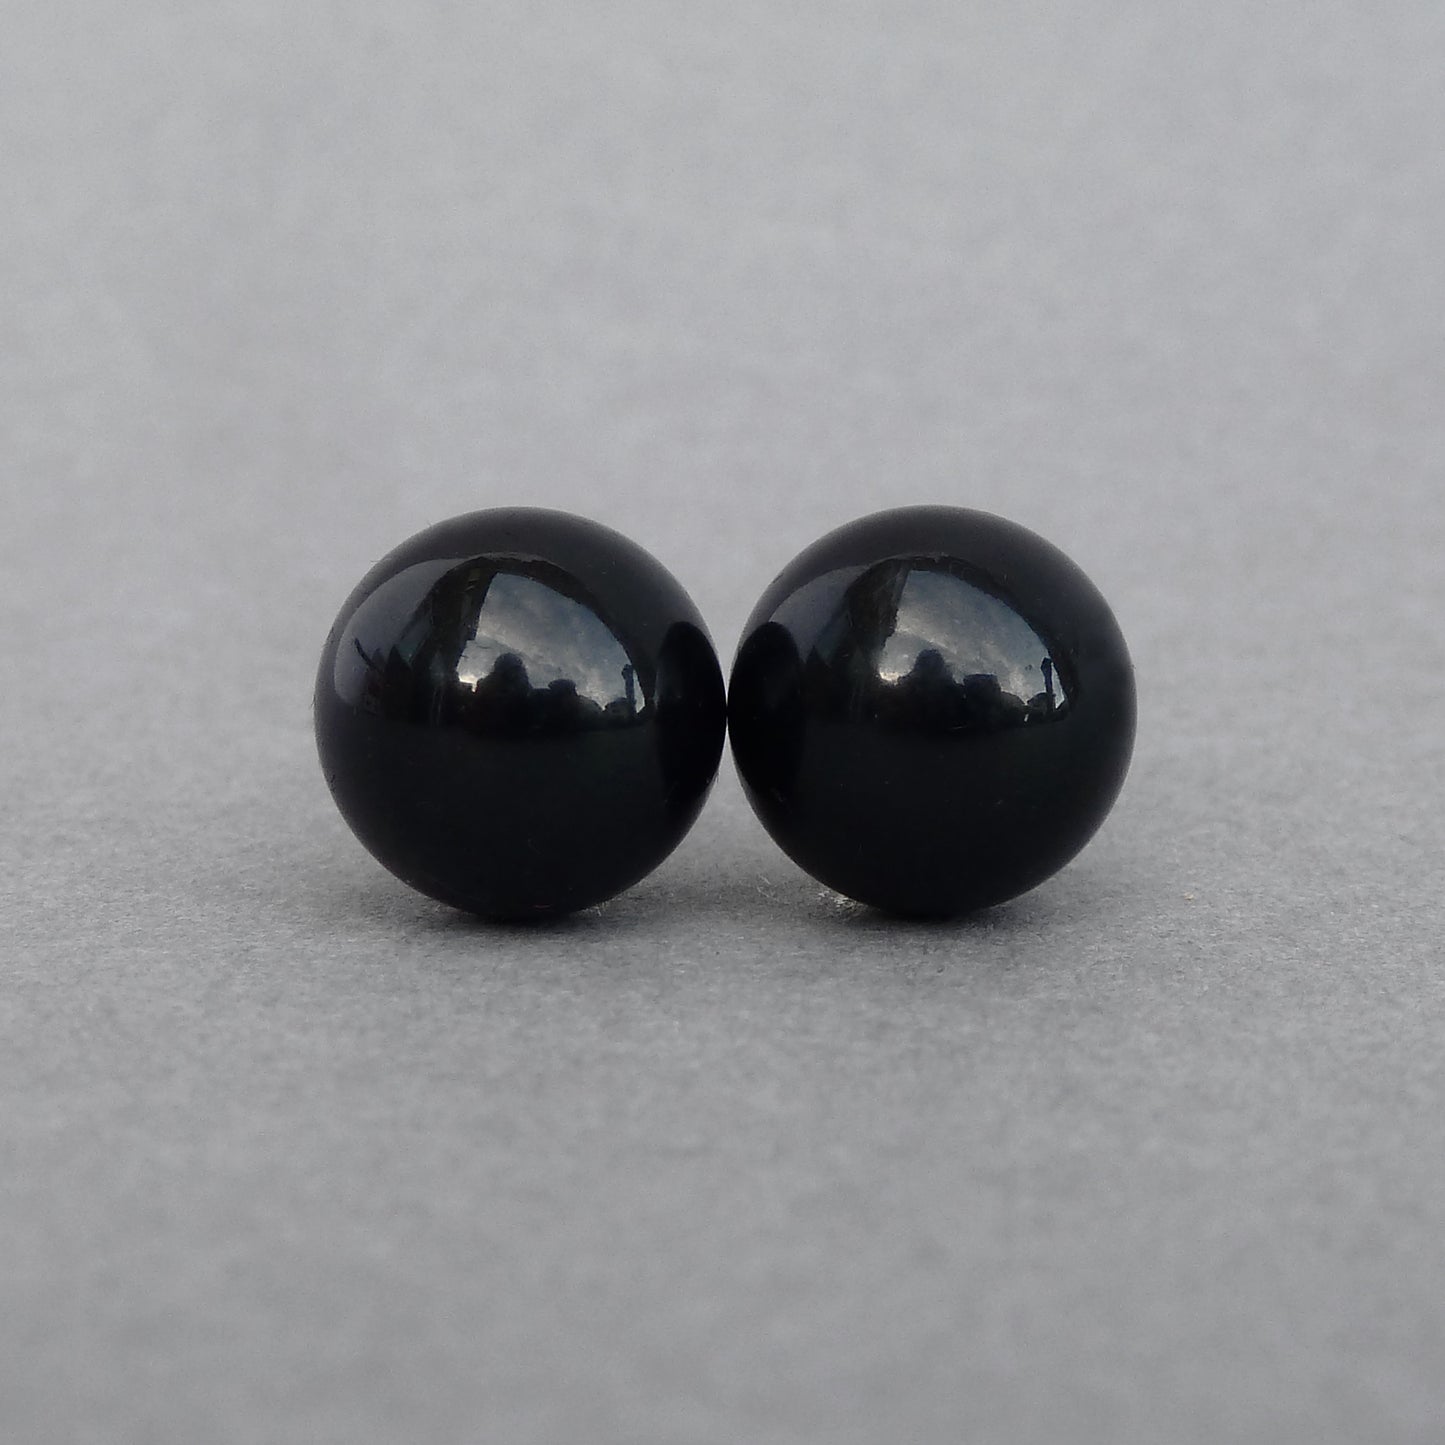 Large jet black stud earrings